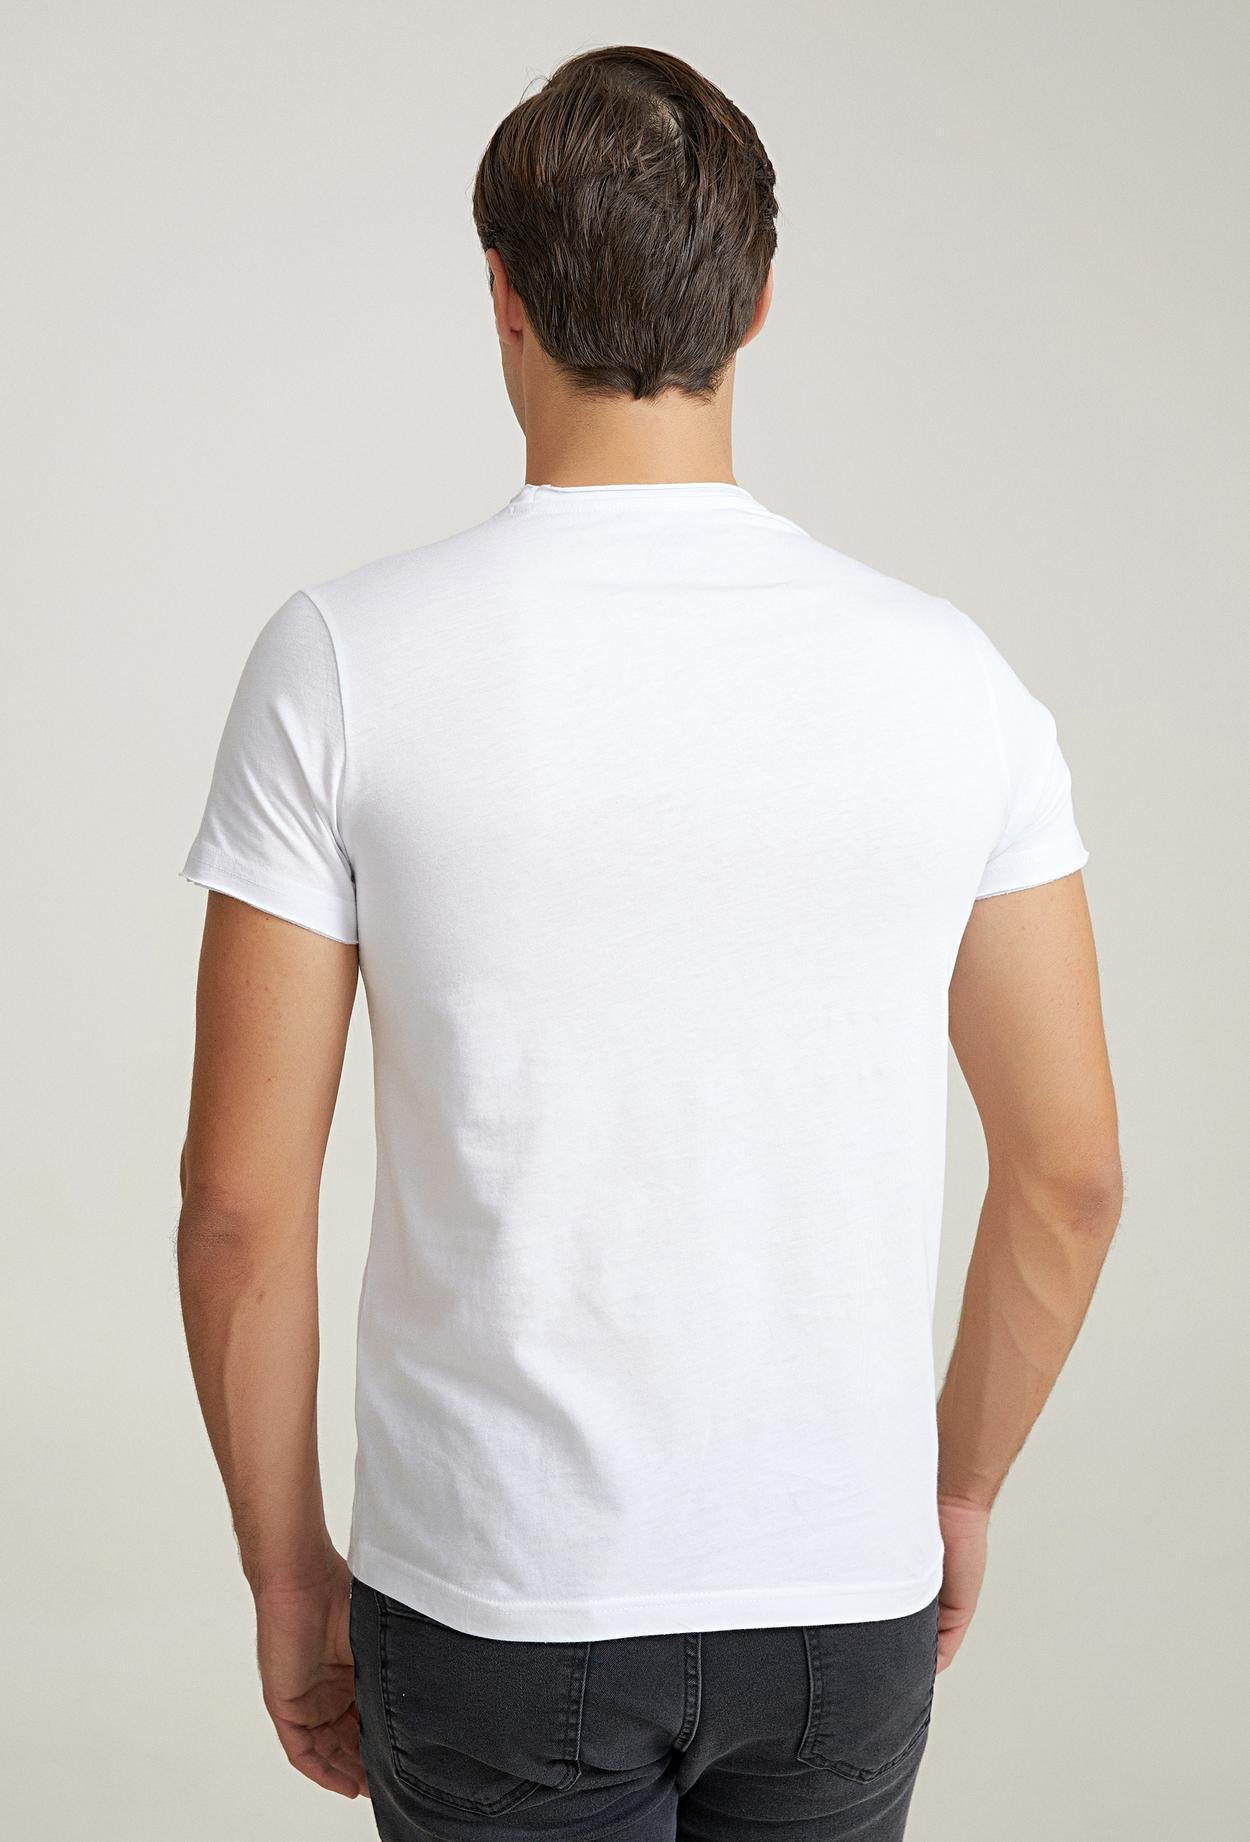 Twn Slim Fit Beyaz Baskılı T-Shirt